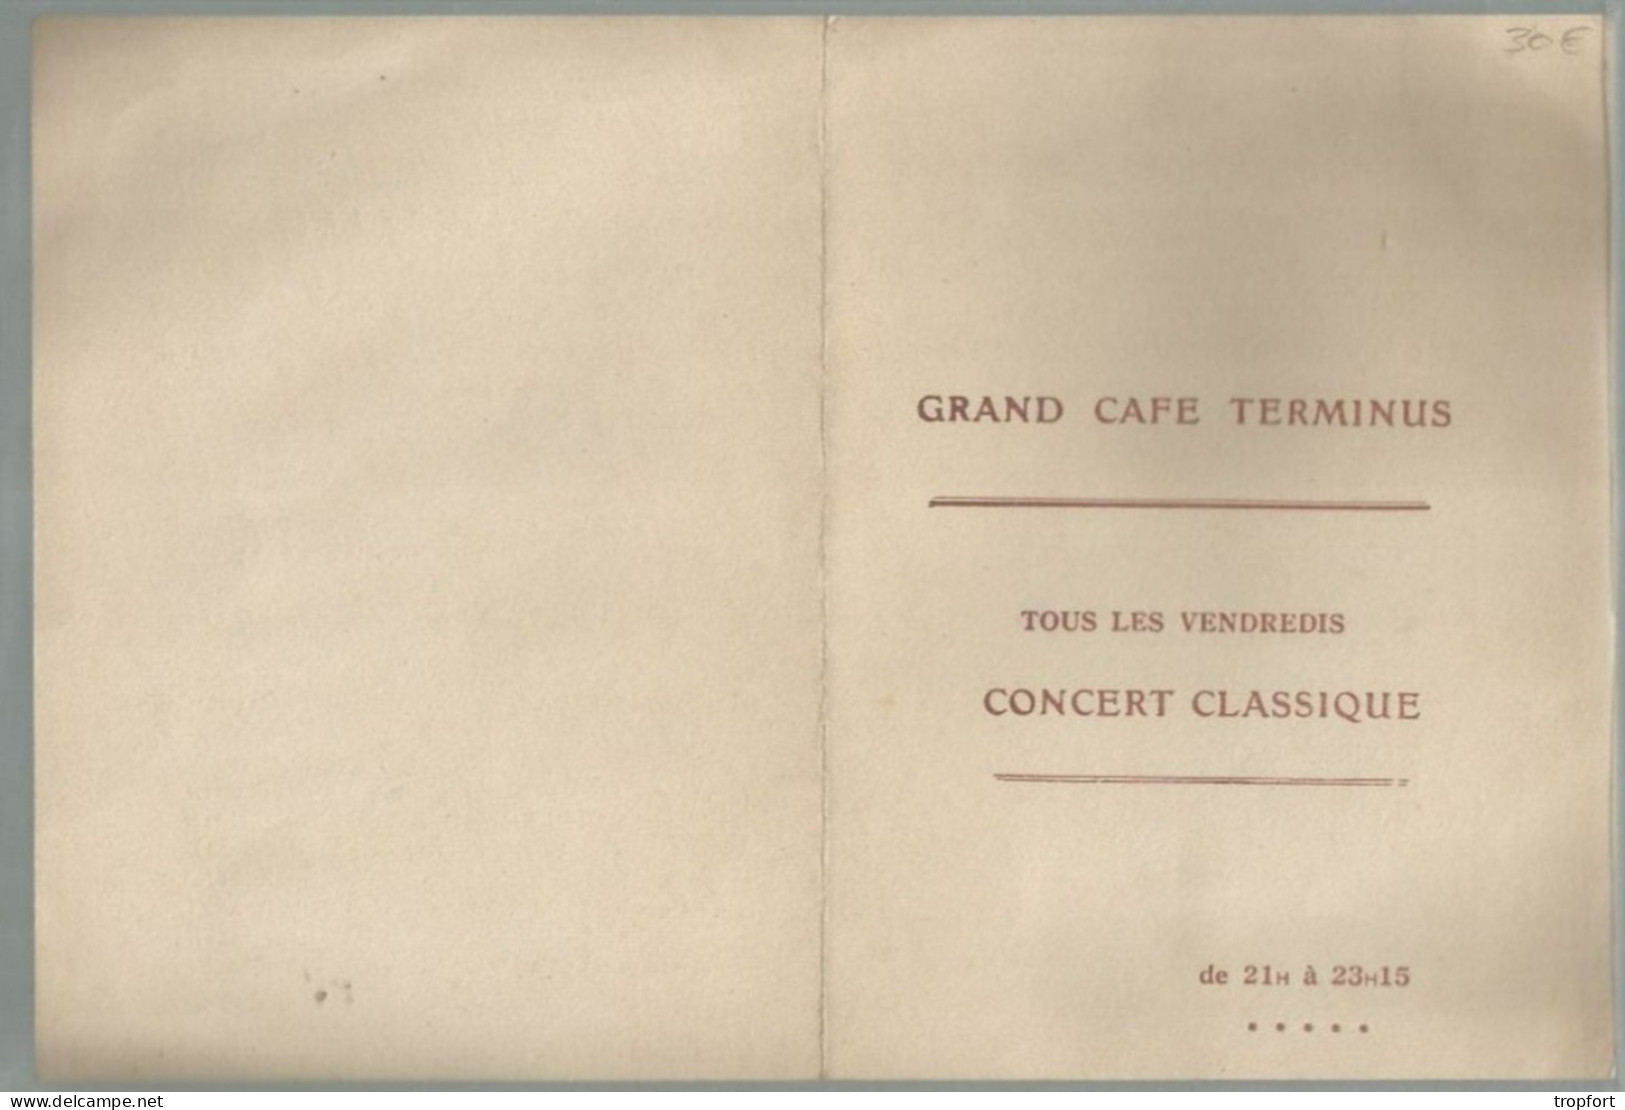 PG / Vintage // PROGRAMME CONCERT CLASSIQUE Musique 1934 PG Grand Café Terminus PG / V BADENES GARCIA Madrid // DELVIGNE - Programma's